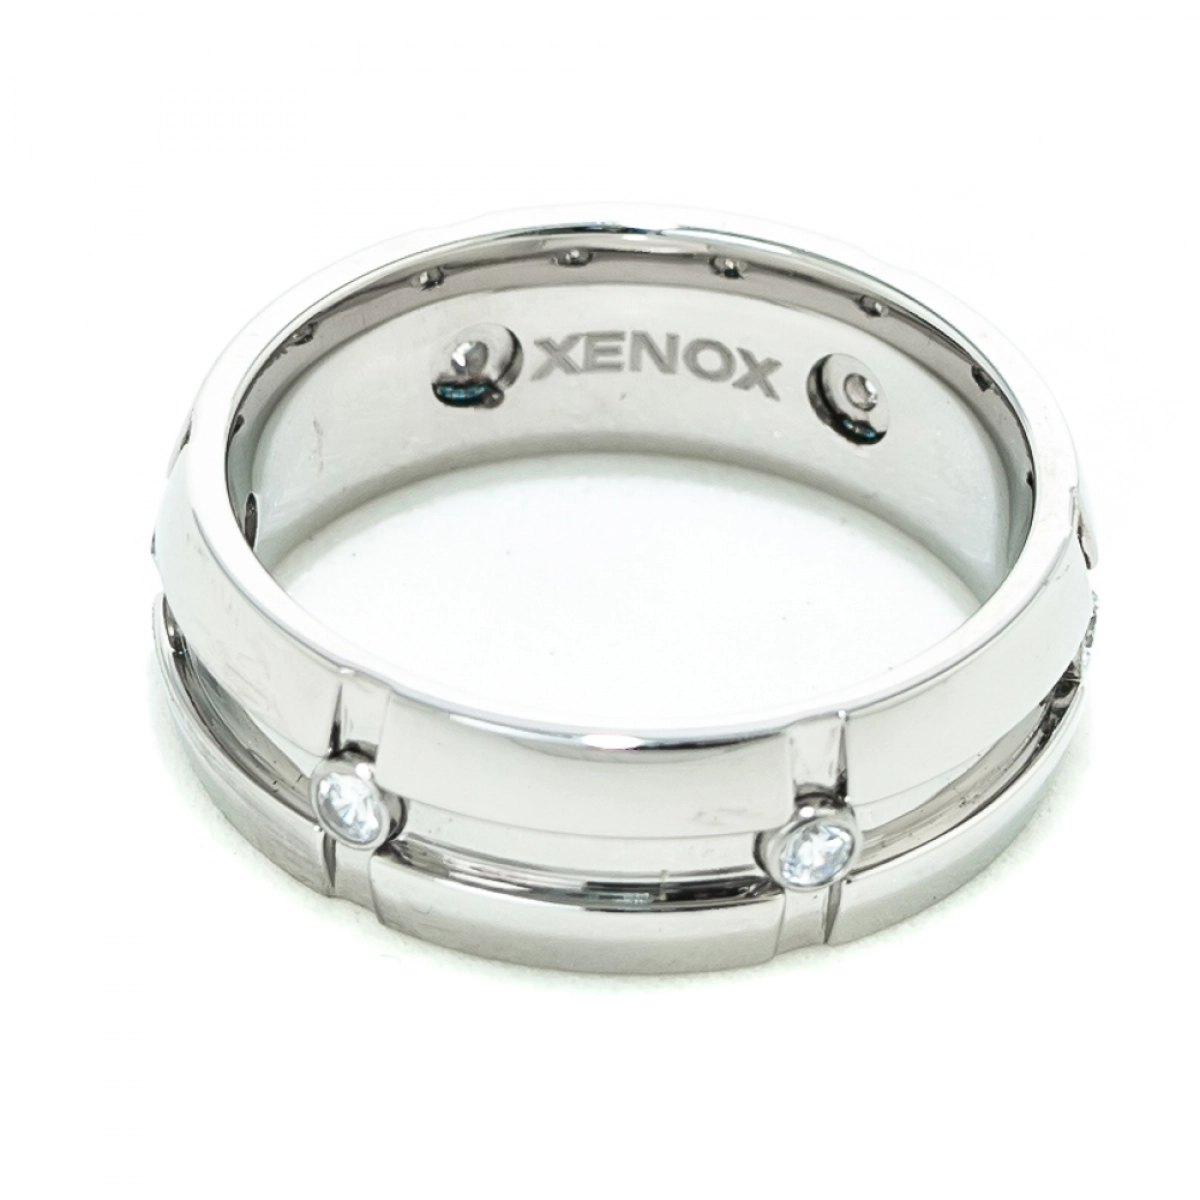 RING WOMAN X1480-54 Xenox